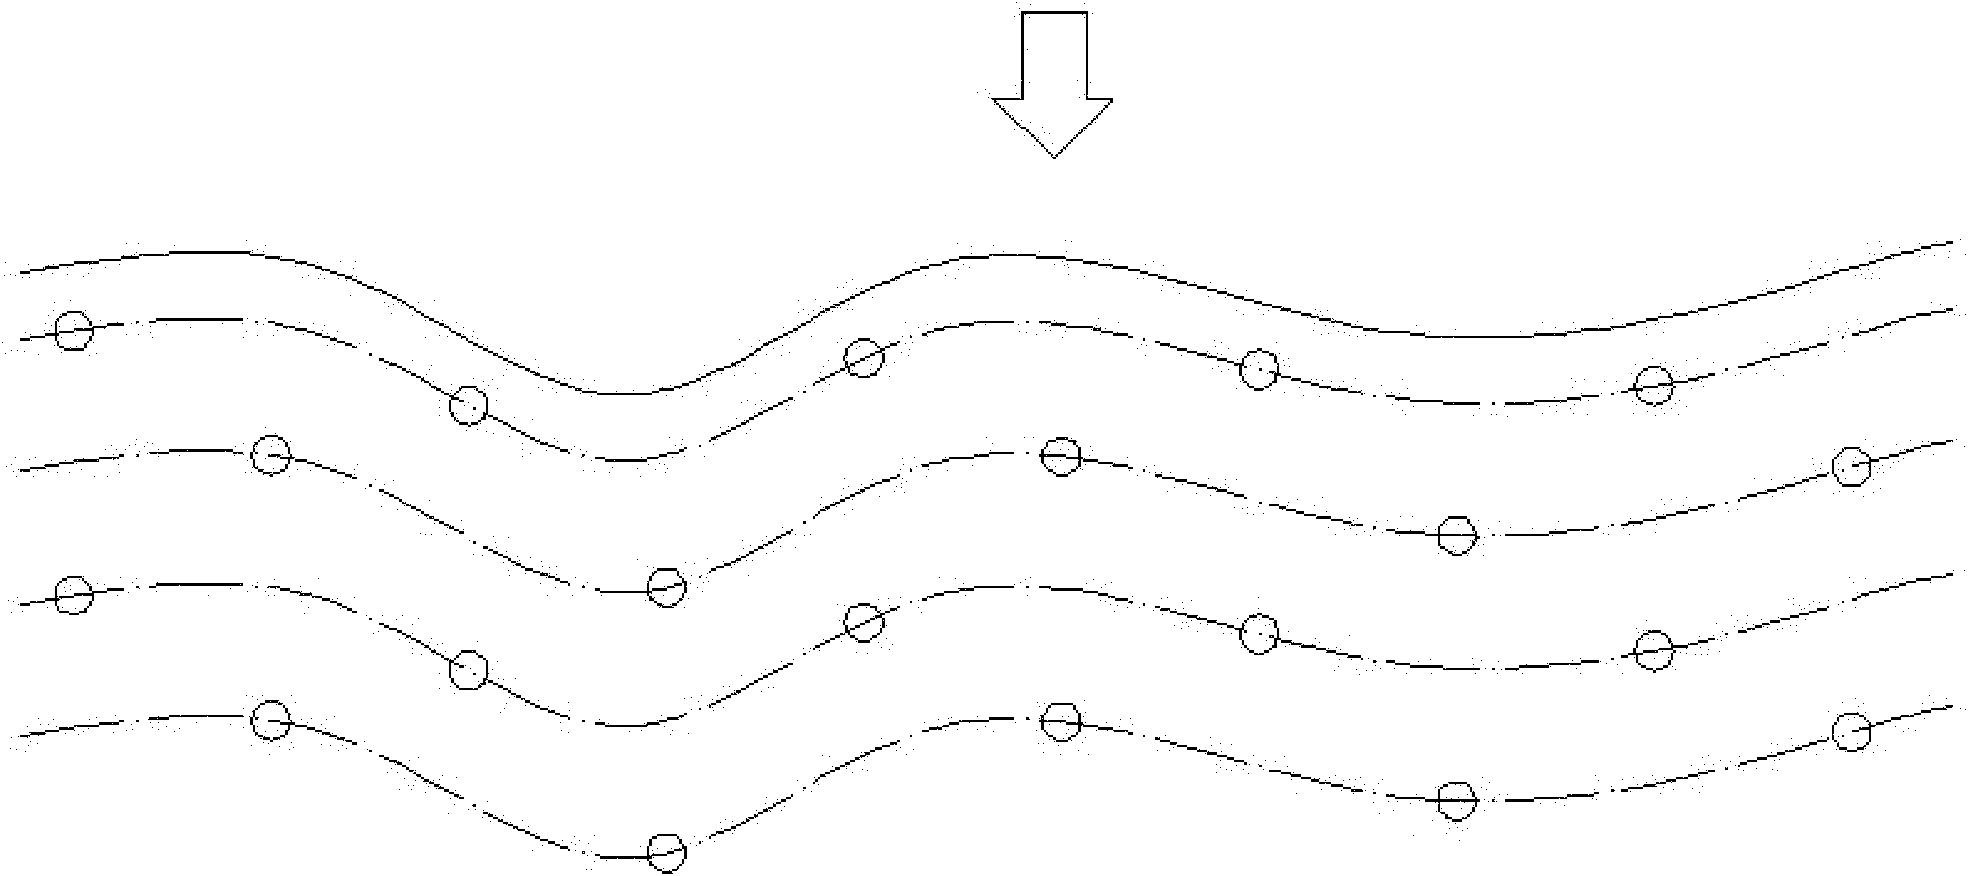 Reverse hole distributing method used in longhole bench blasting